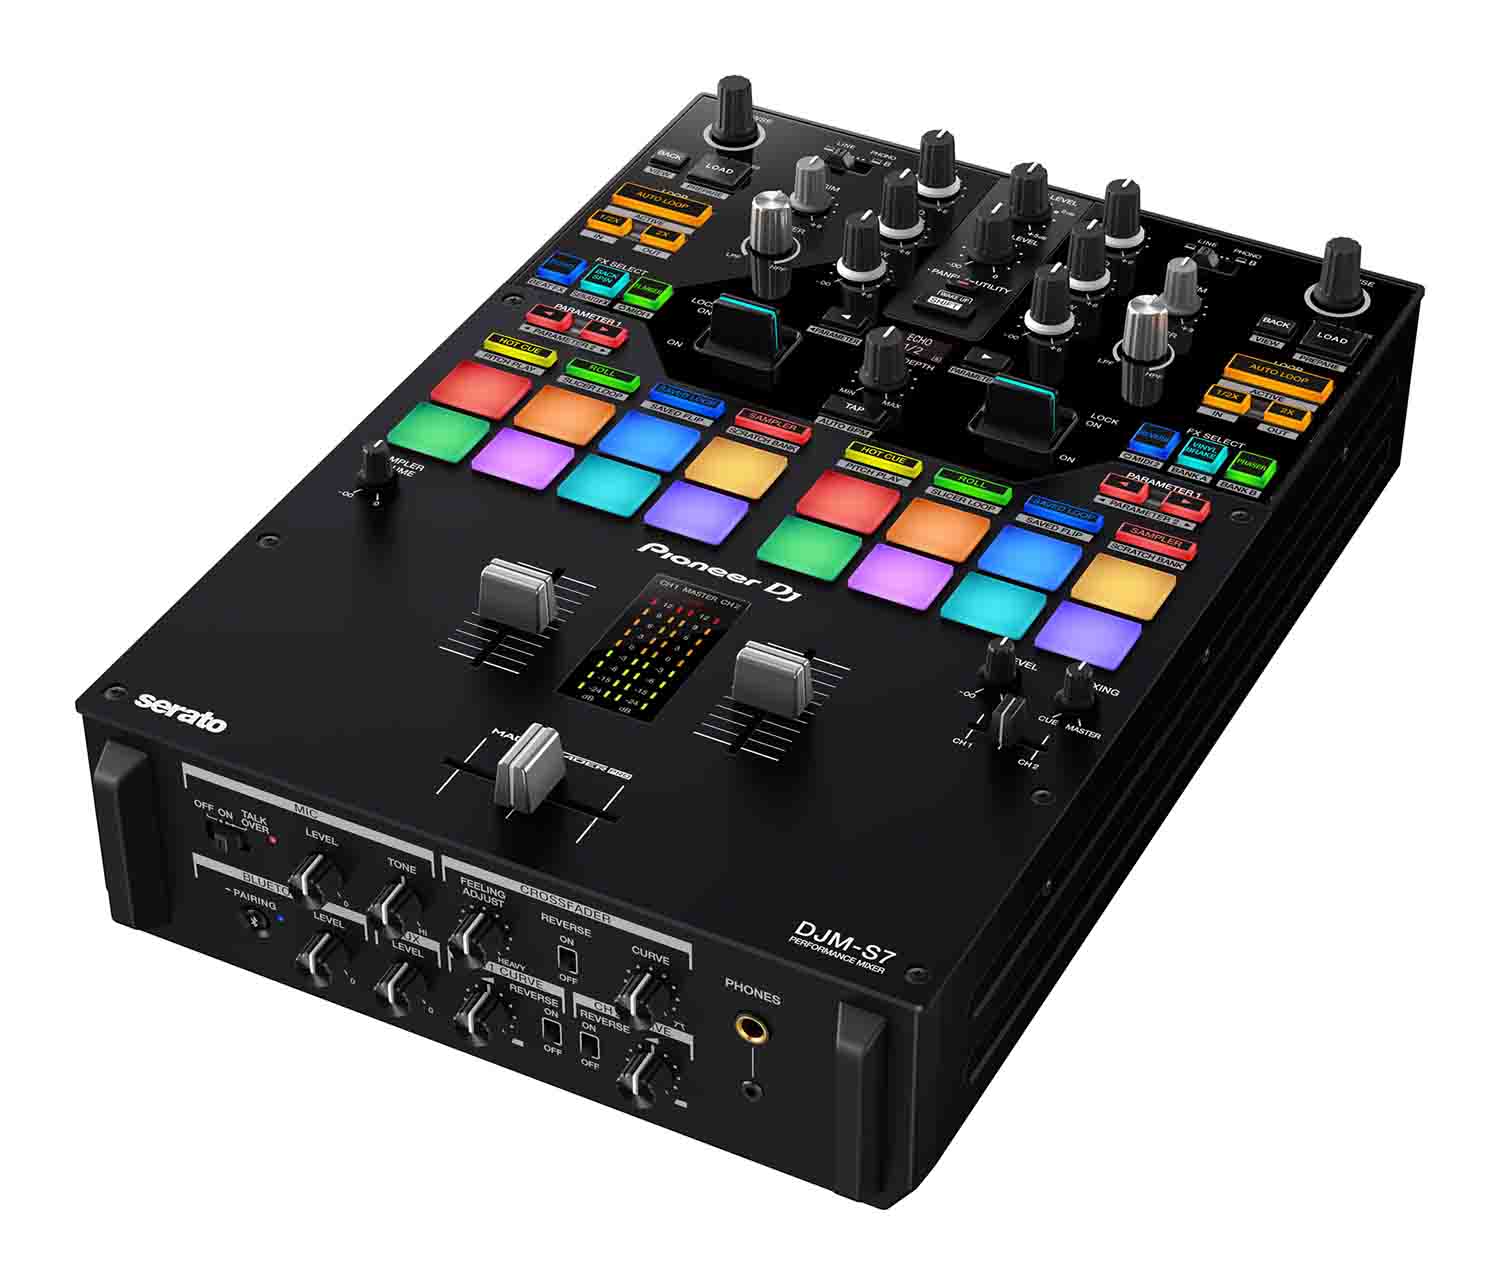 Open Box: Pioneer DJ DJM-S7 Scratch-Style 2-Channel Performance DJ Mixer - Black - Hollywood DJ